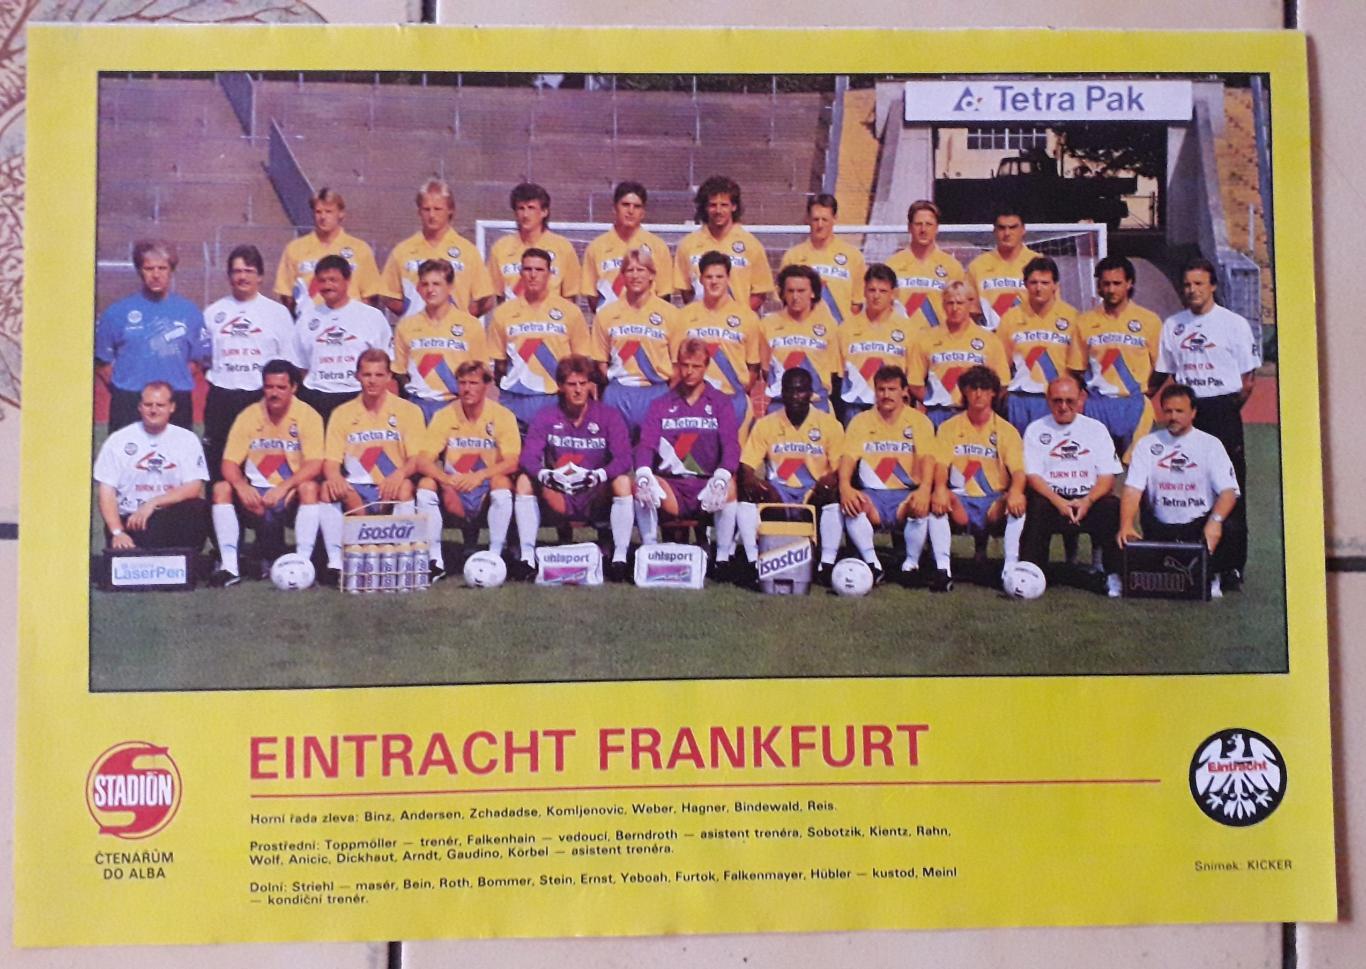 Eintracht Frankfurt.Плакат формата А4 из журнала Stadion.